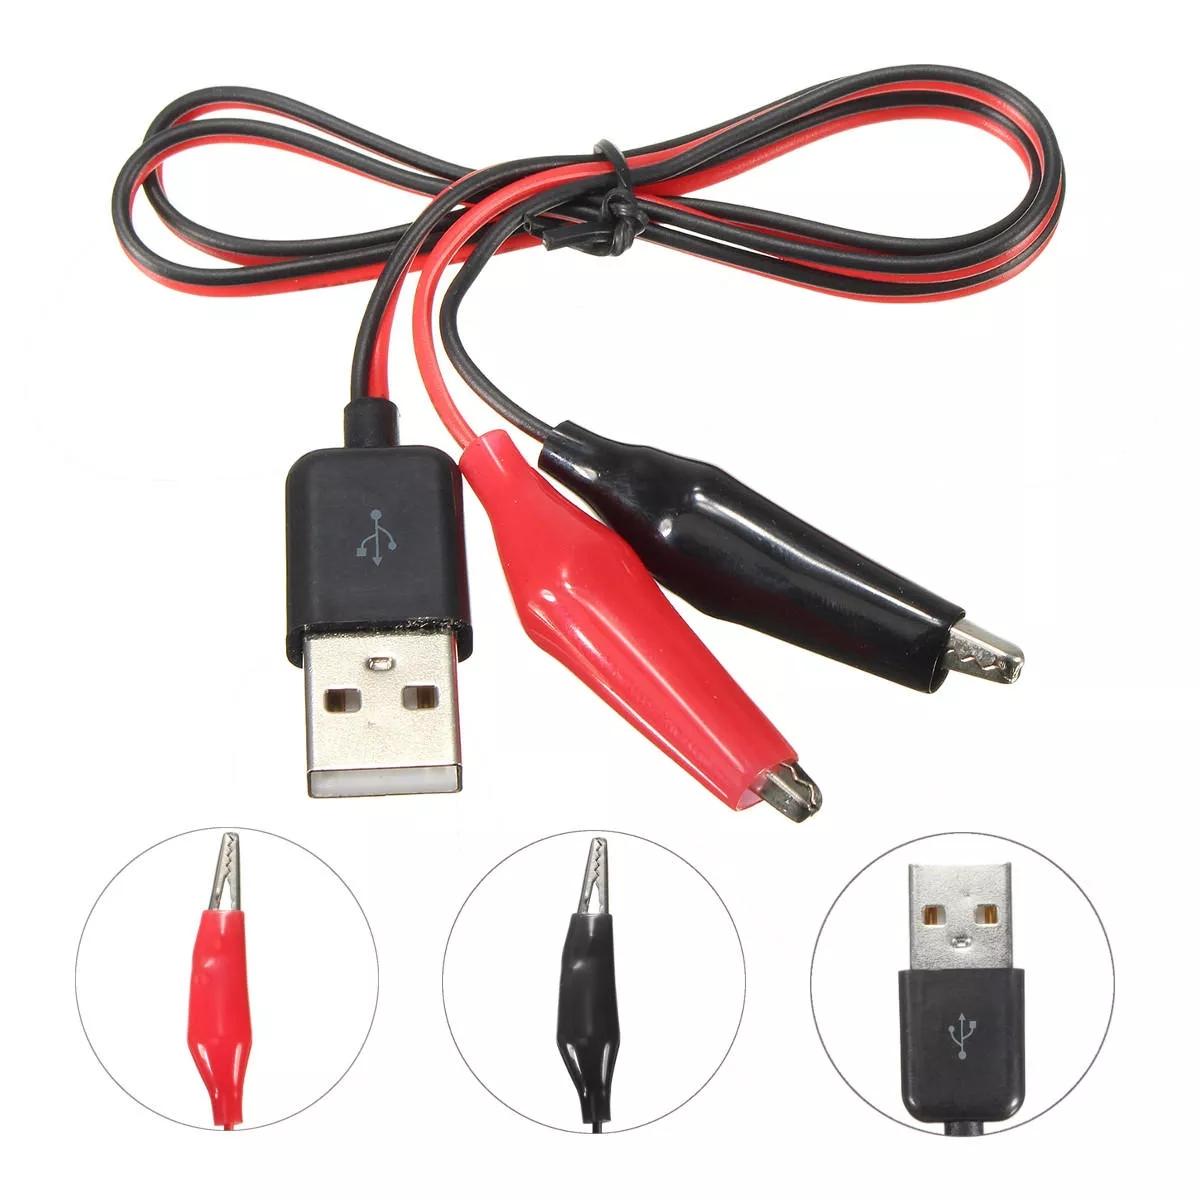 2 Stks DANIU 60 CM Krokodil Testclips Klem naar USB-connector Voedingsadapter Kabeldraad